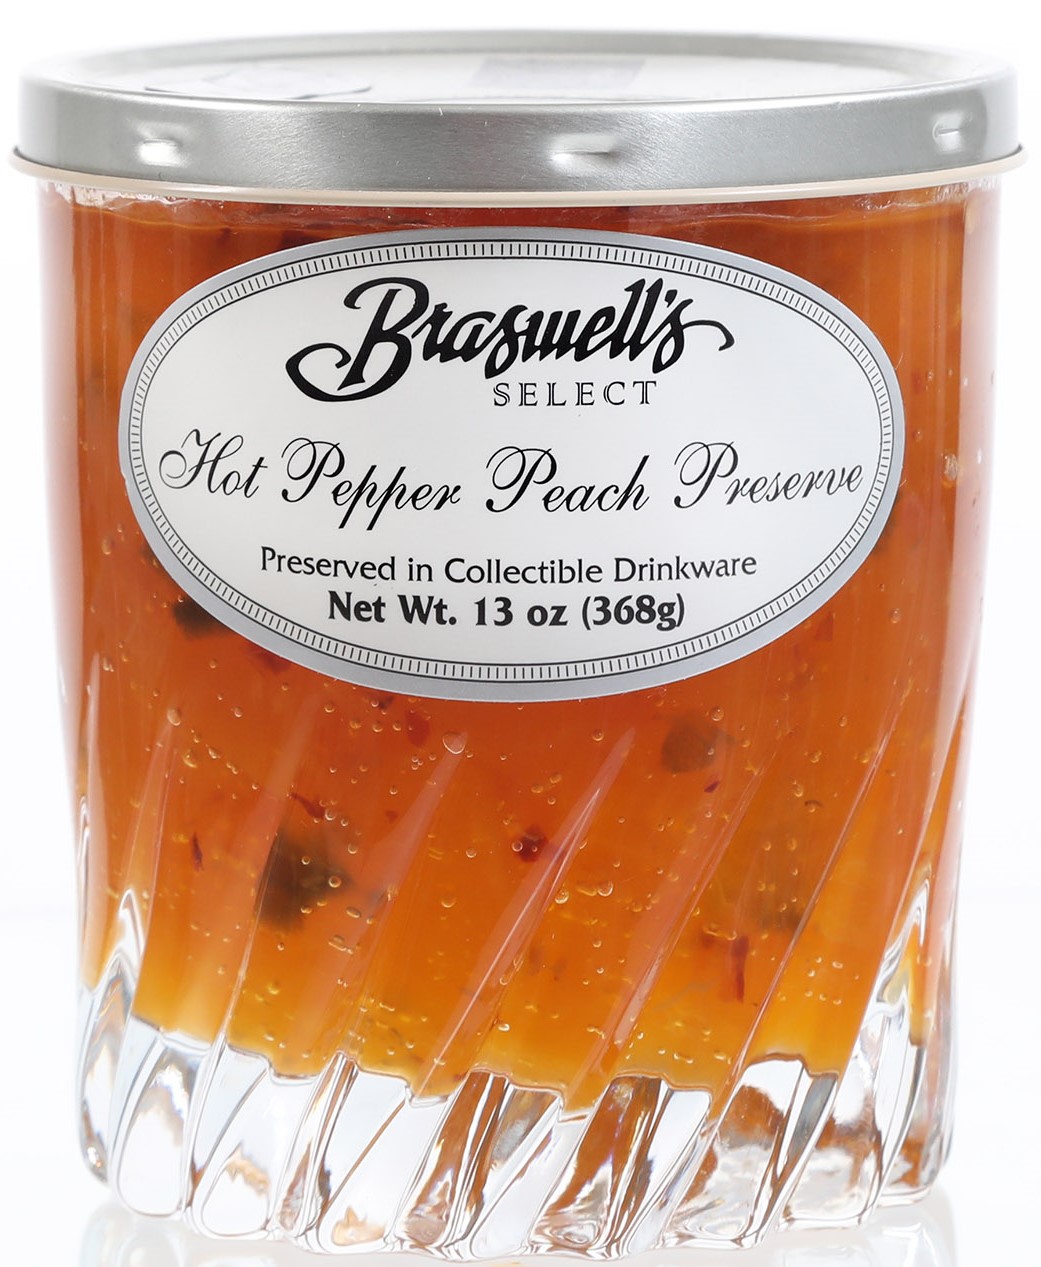 Braswell's Select Hot Pepper Peach Preserve 13 oz